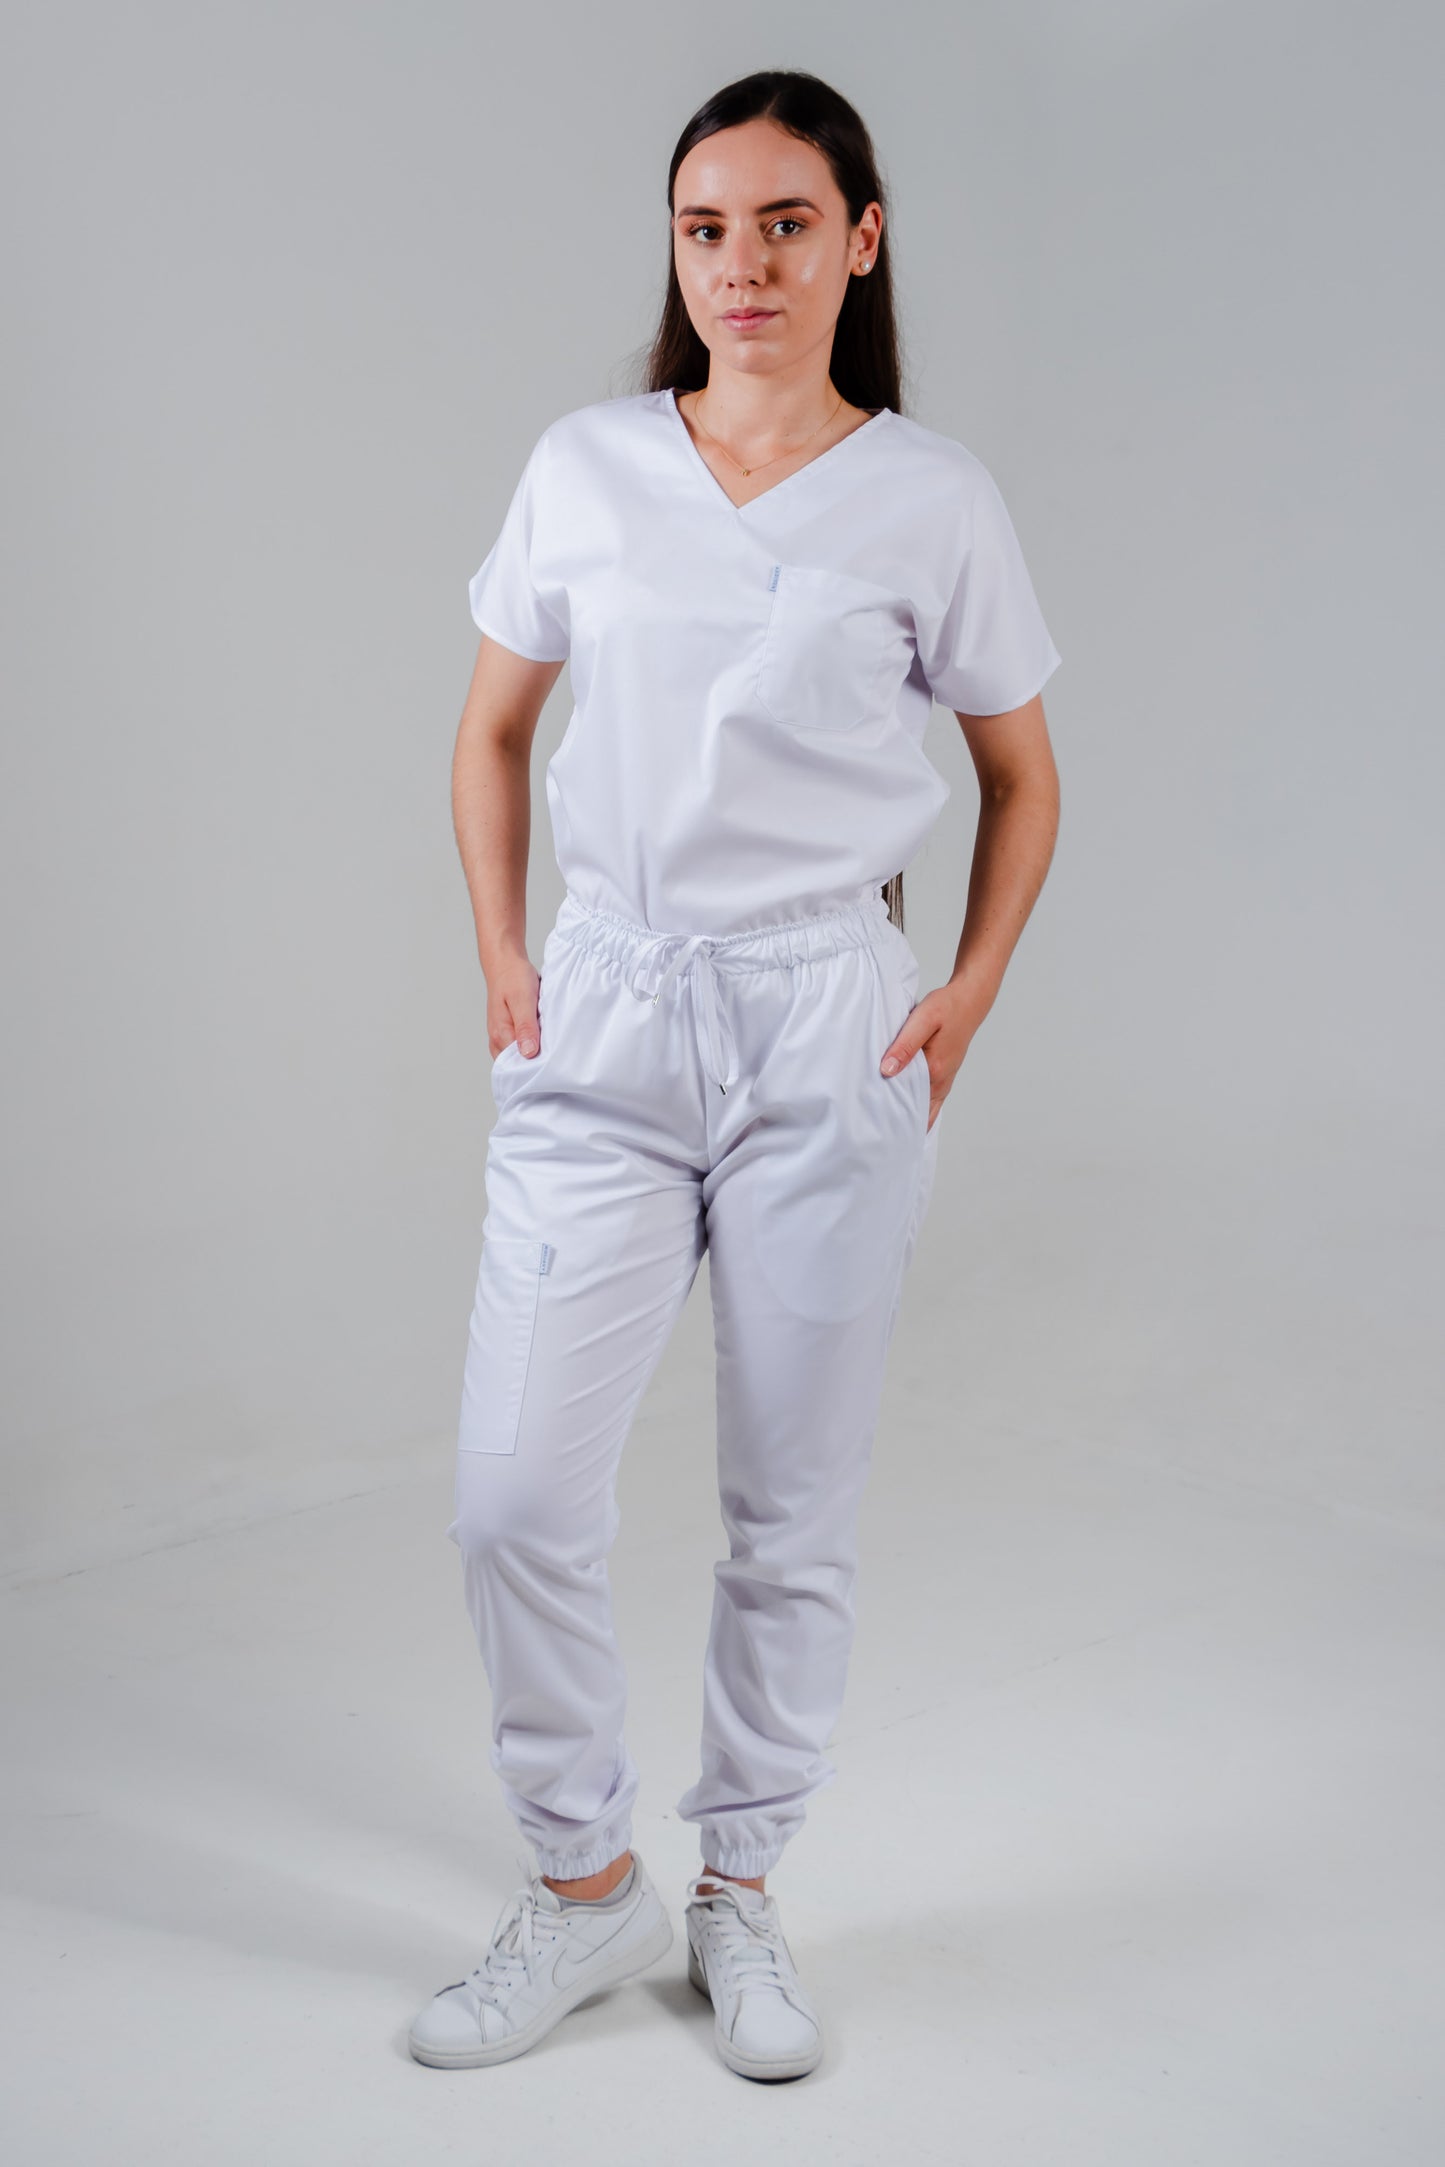 Uniforme quirúrgico para dama color blanco corte jogger. modelo jener marca addisonscrubs.